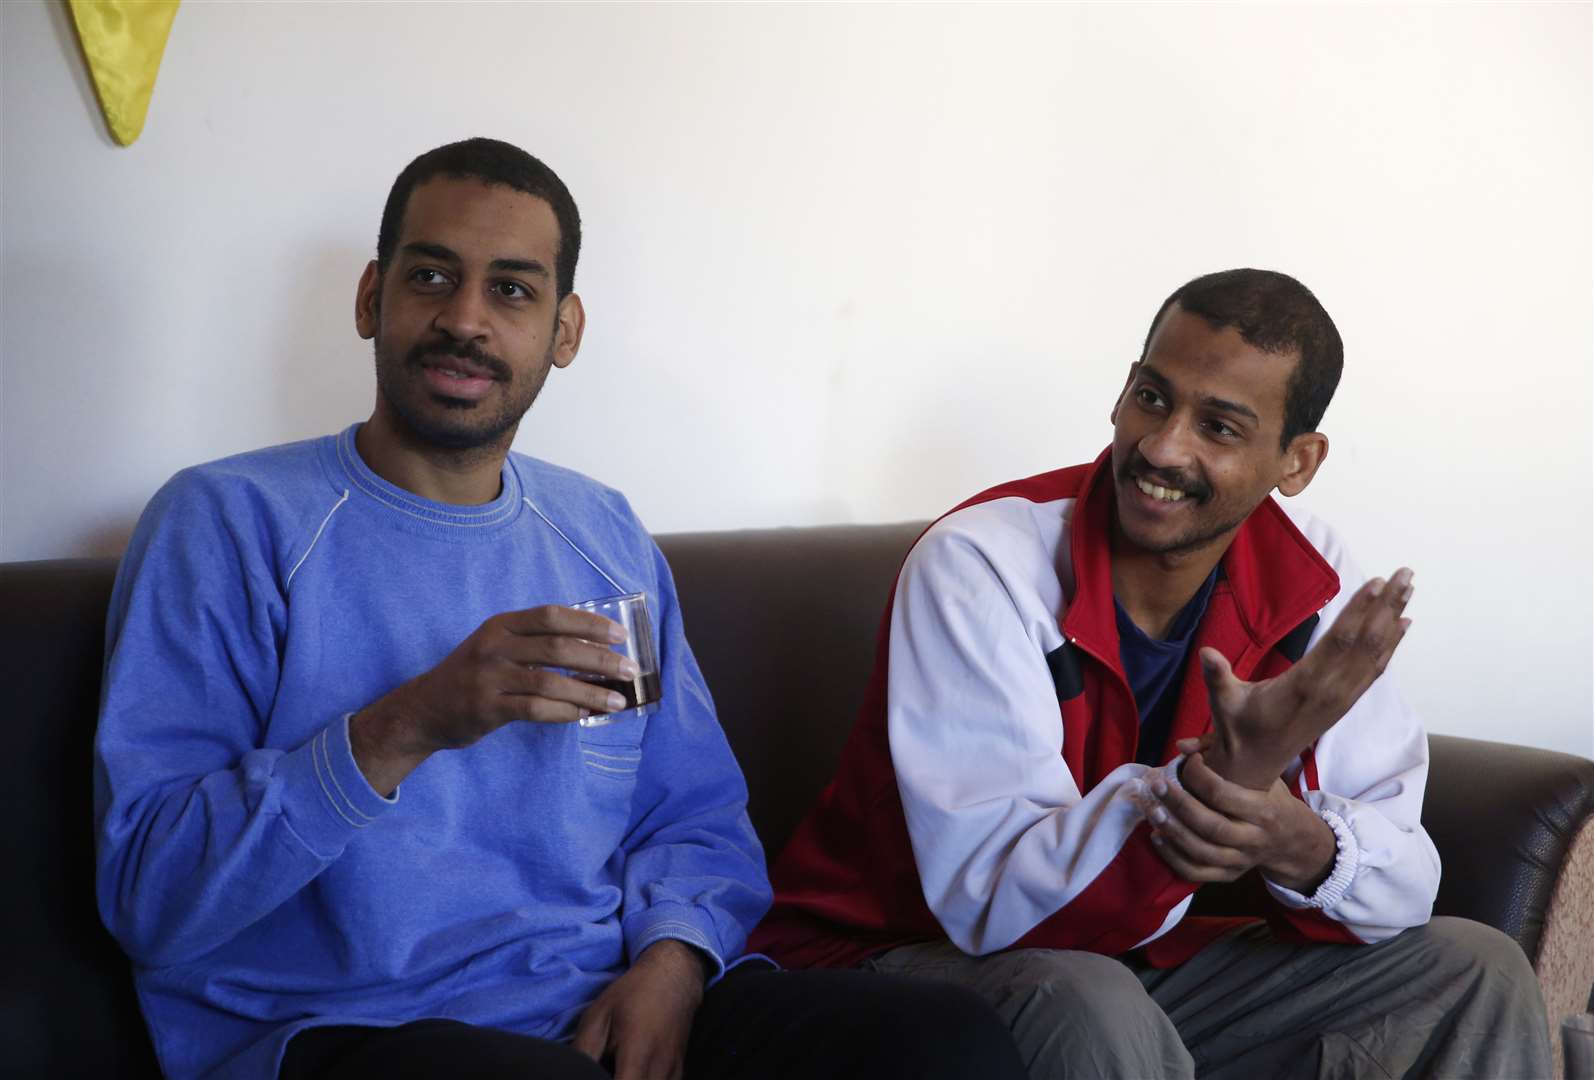 El Shafee Elsheikh, right, with Alexanda Kotey (AP/Hussein Malla)